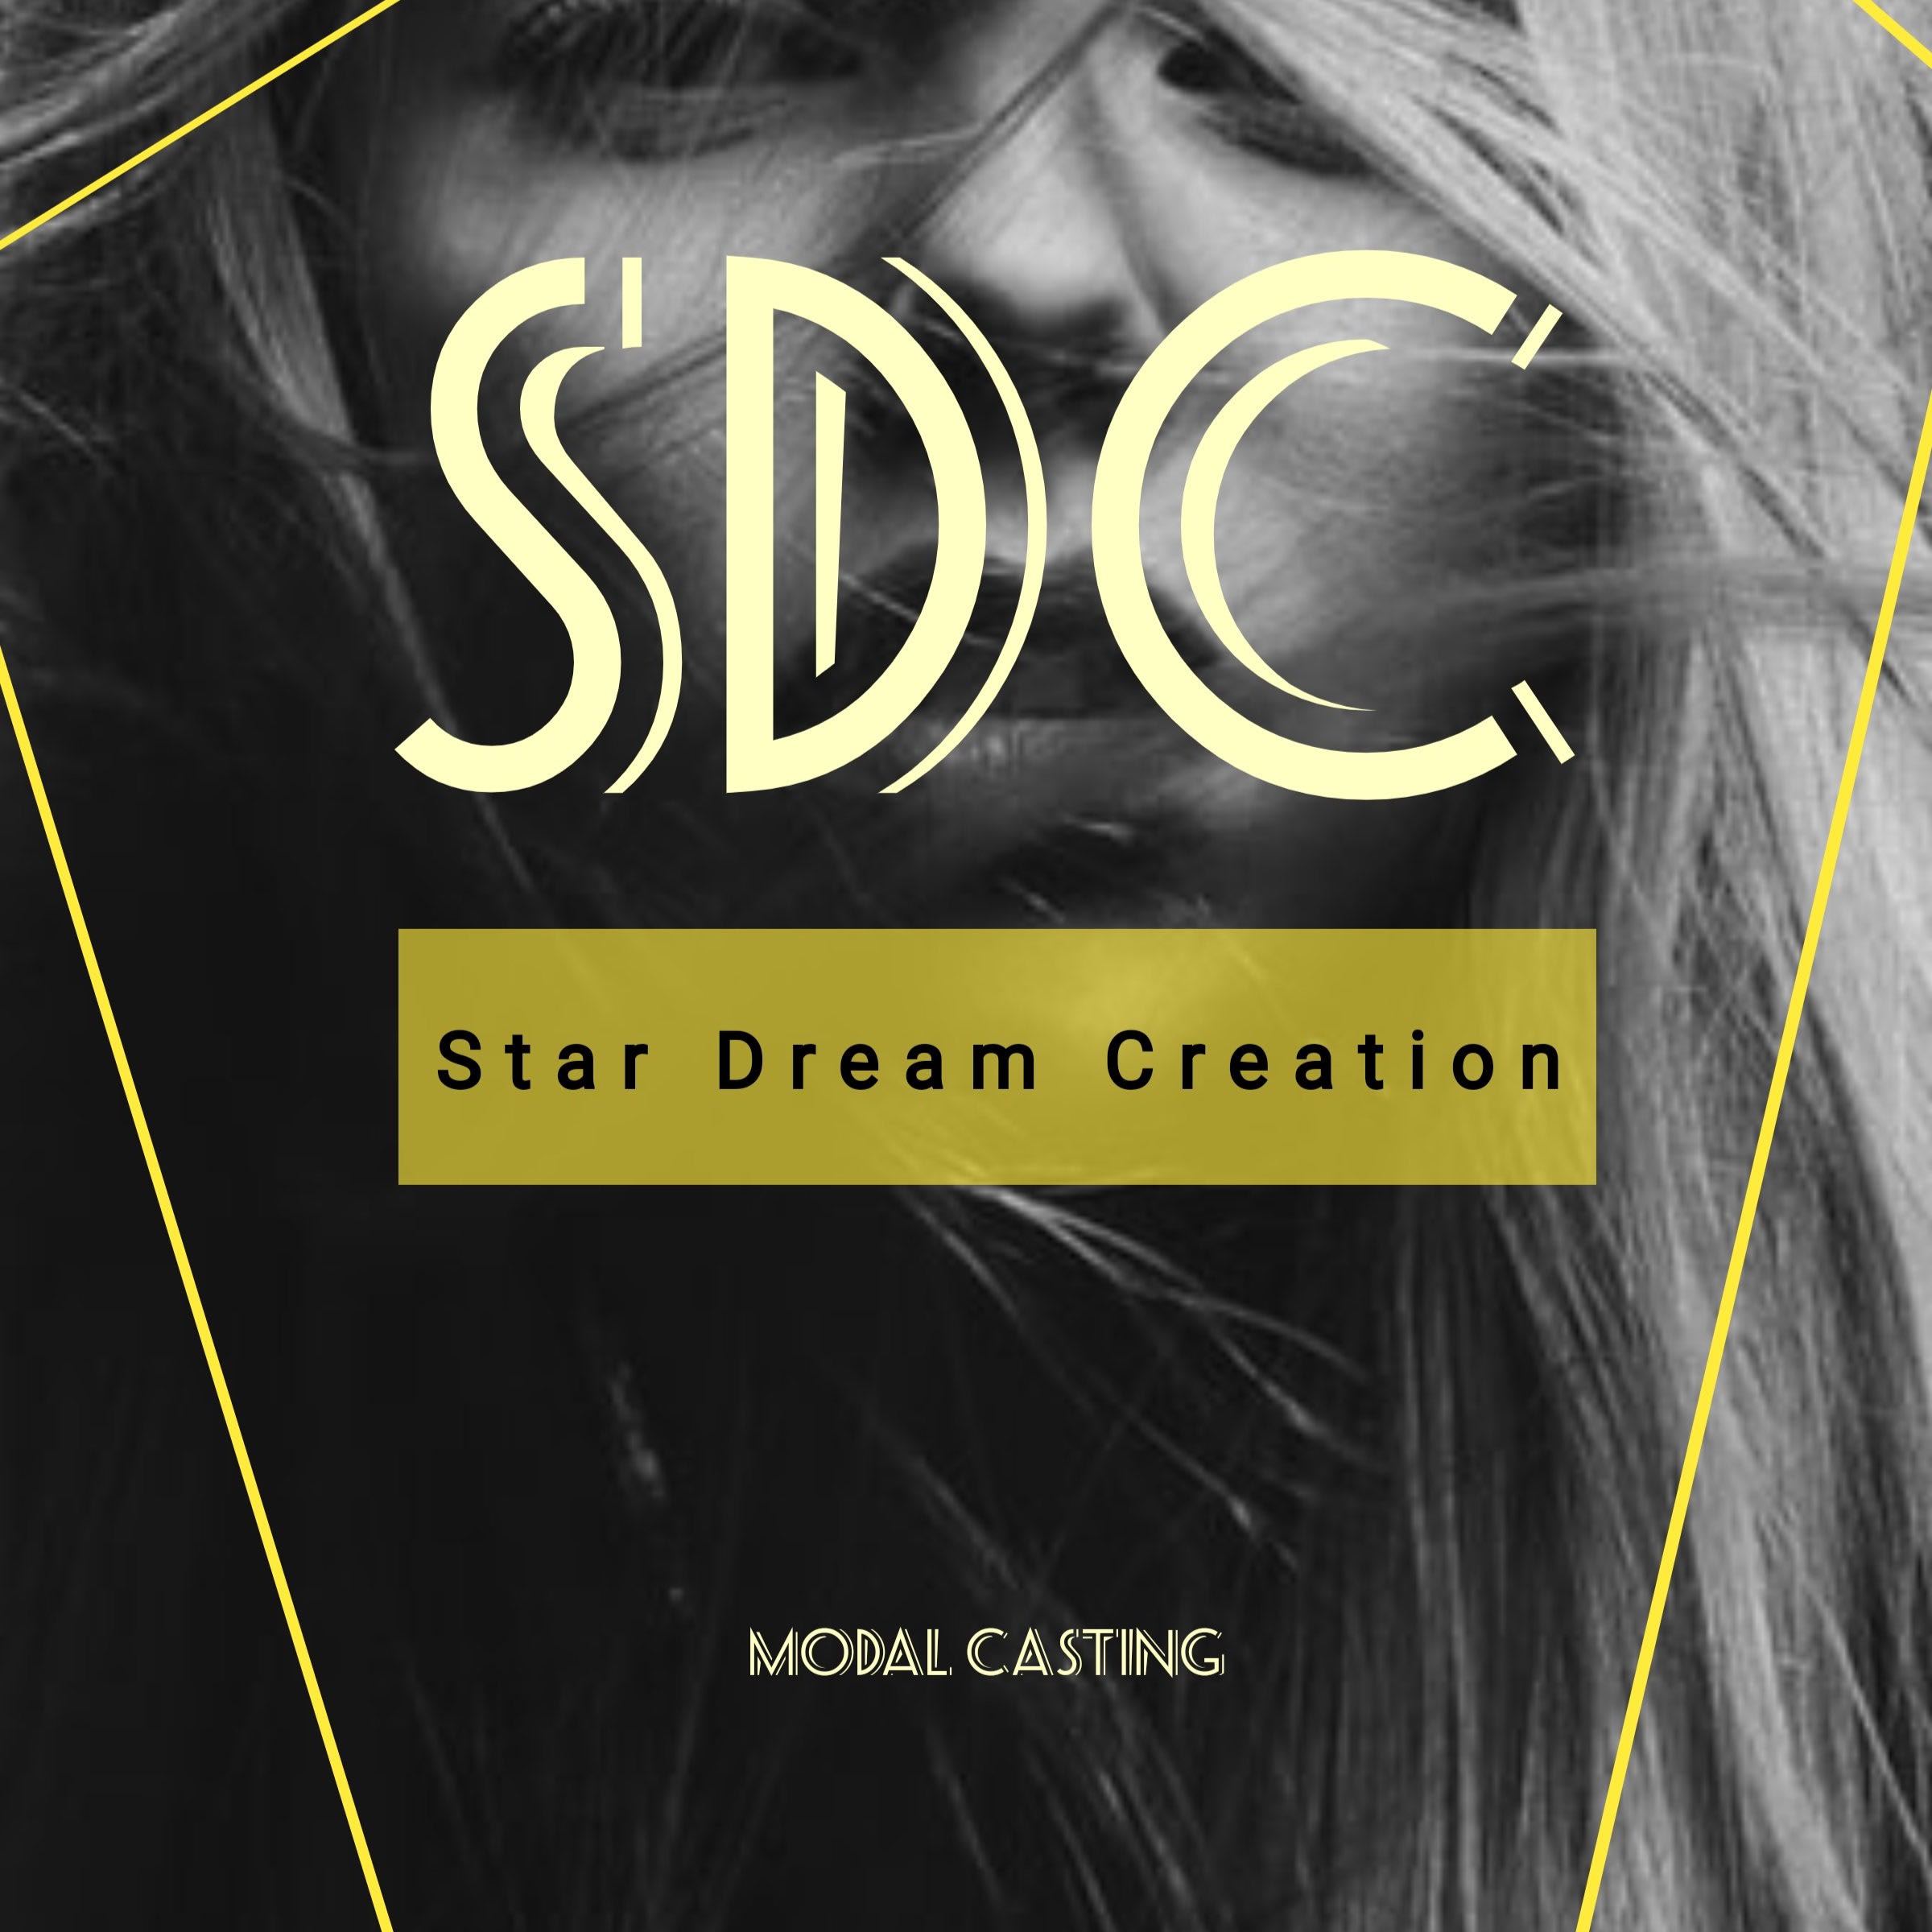 Star Dream Creation